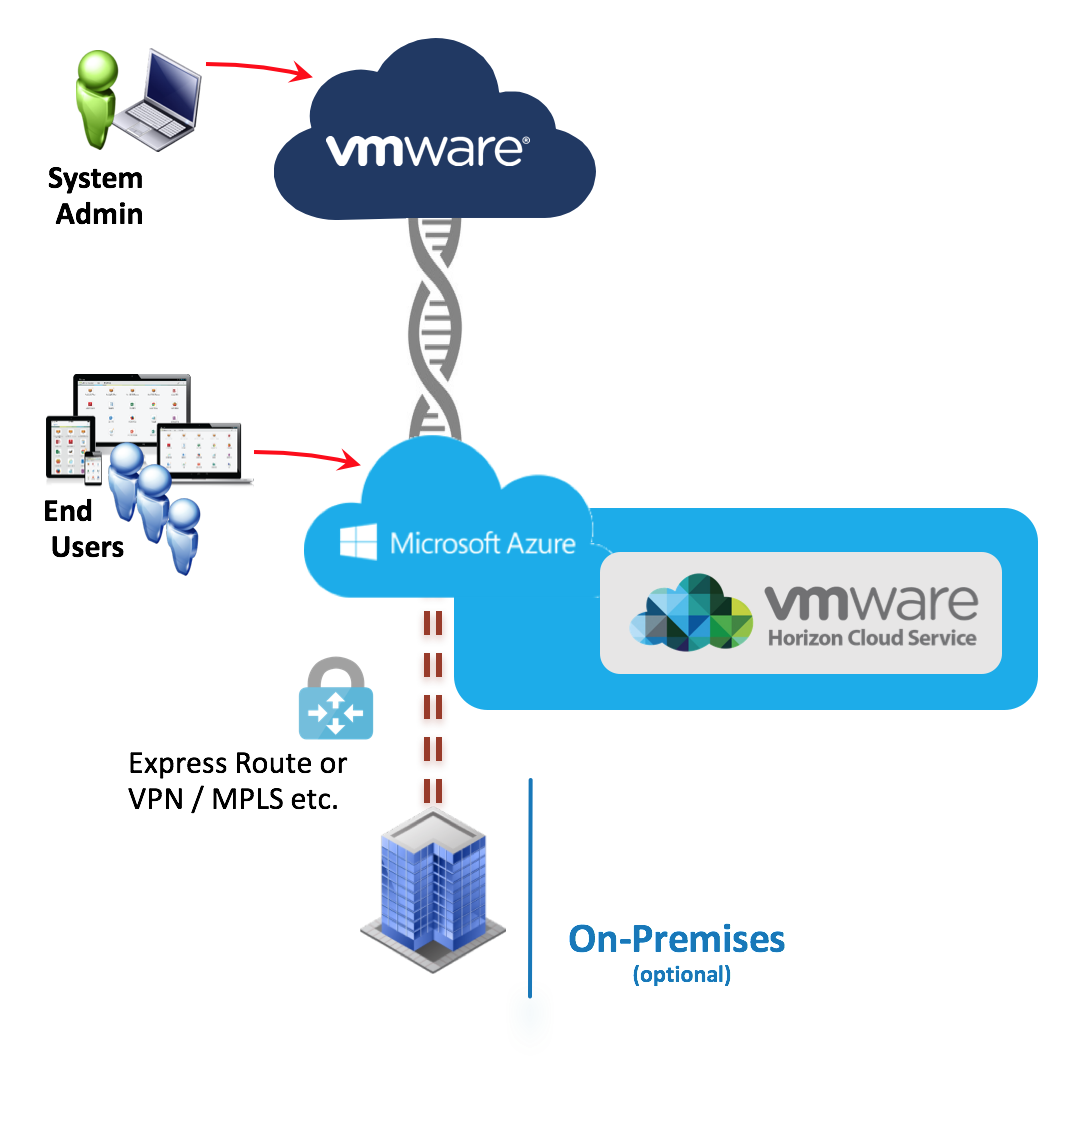 vmware-horizon-cloud-service-microsoft-azure-1